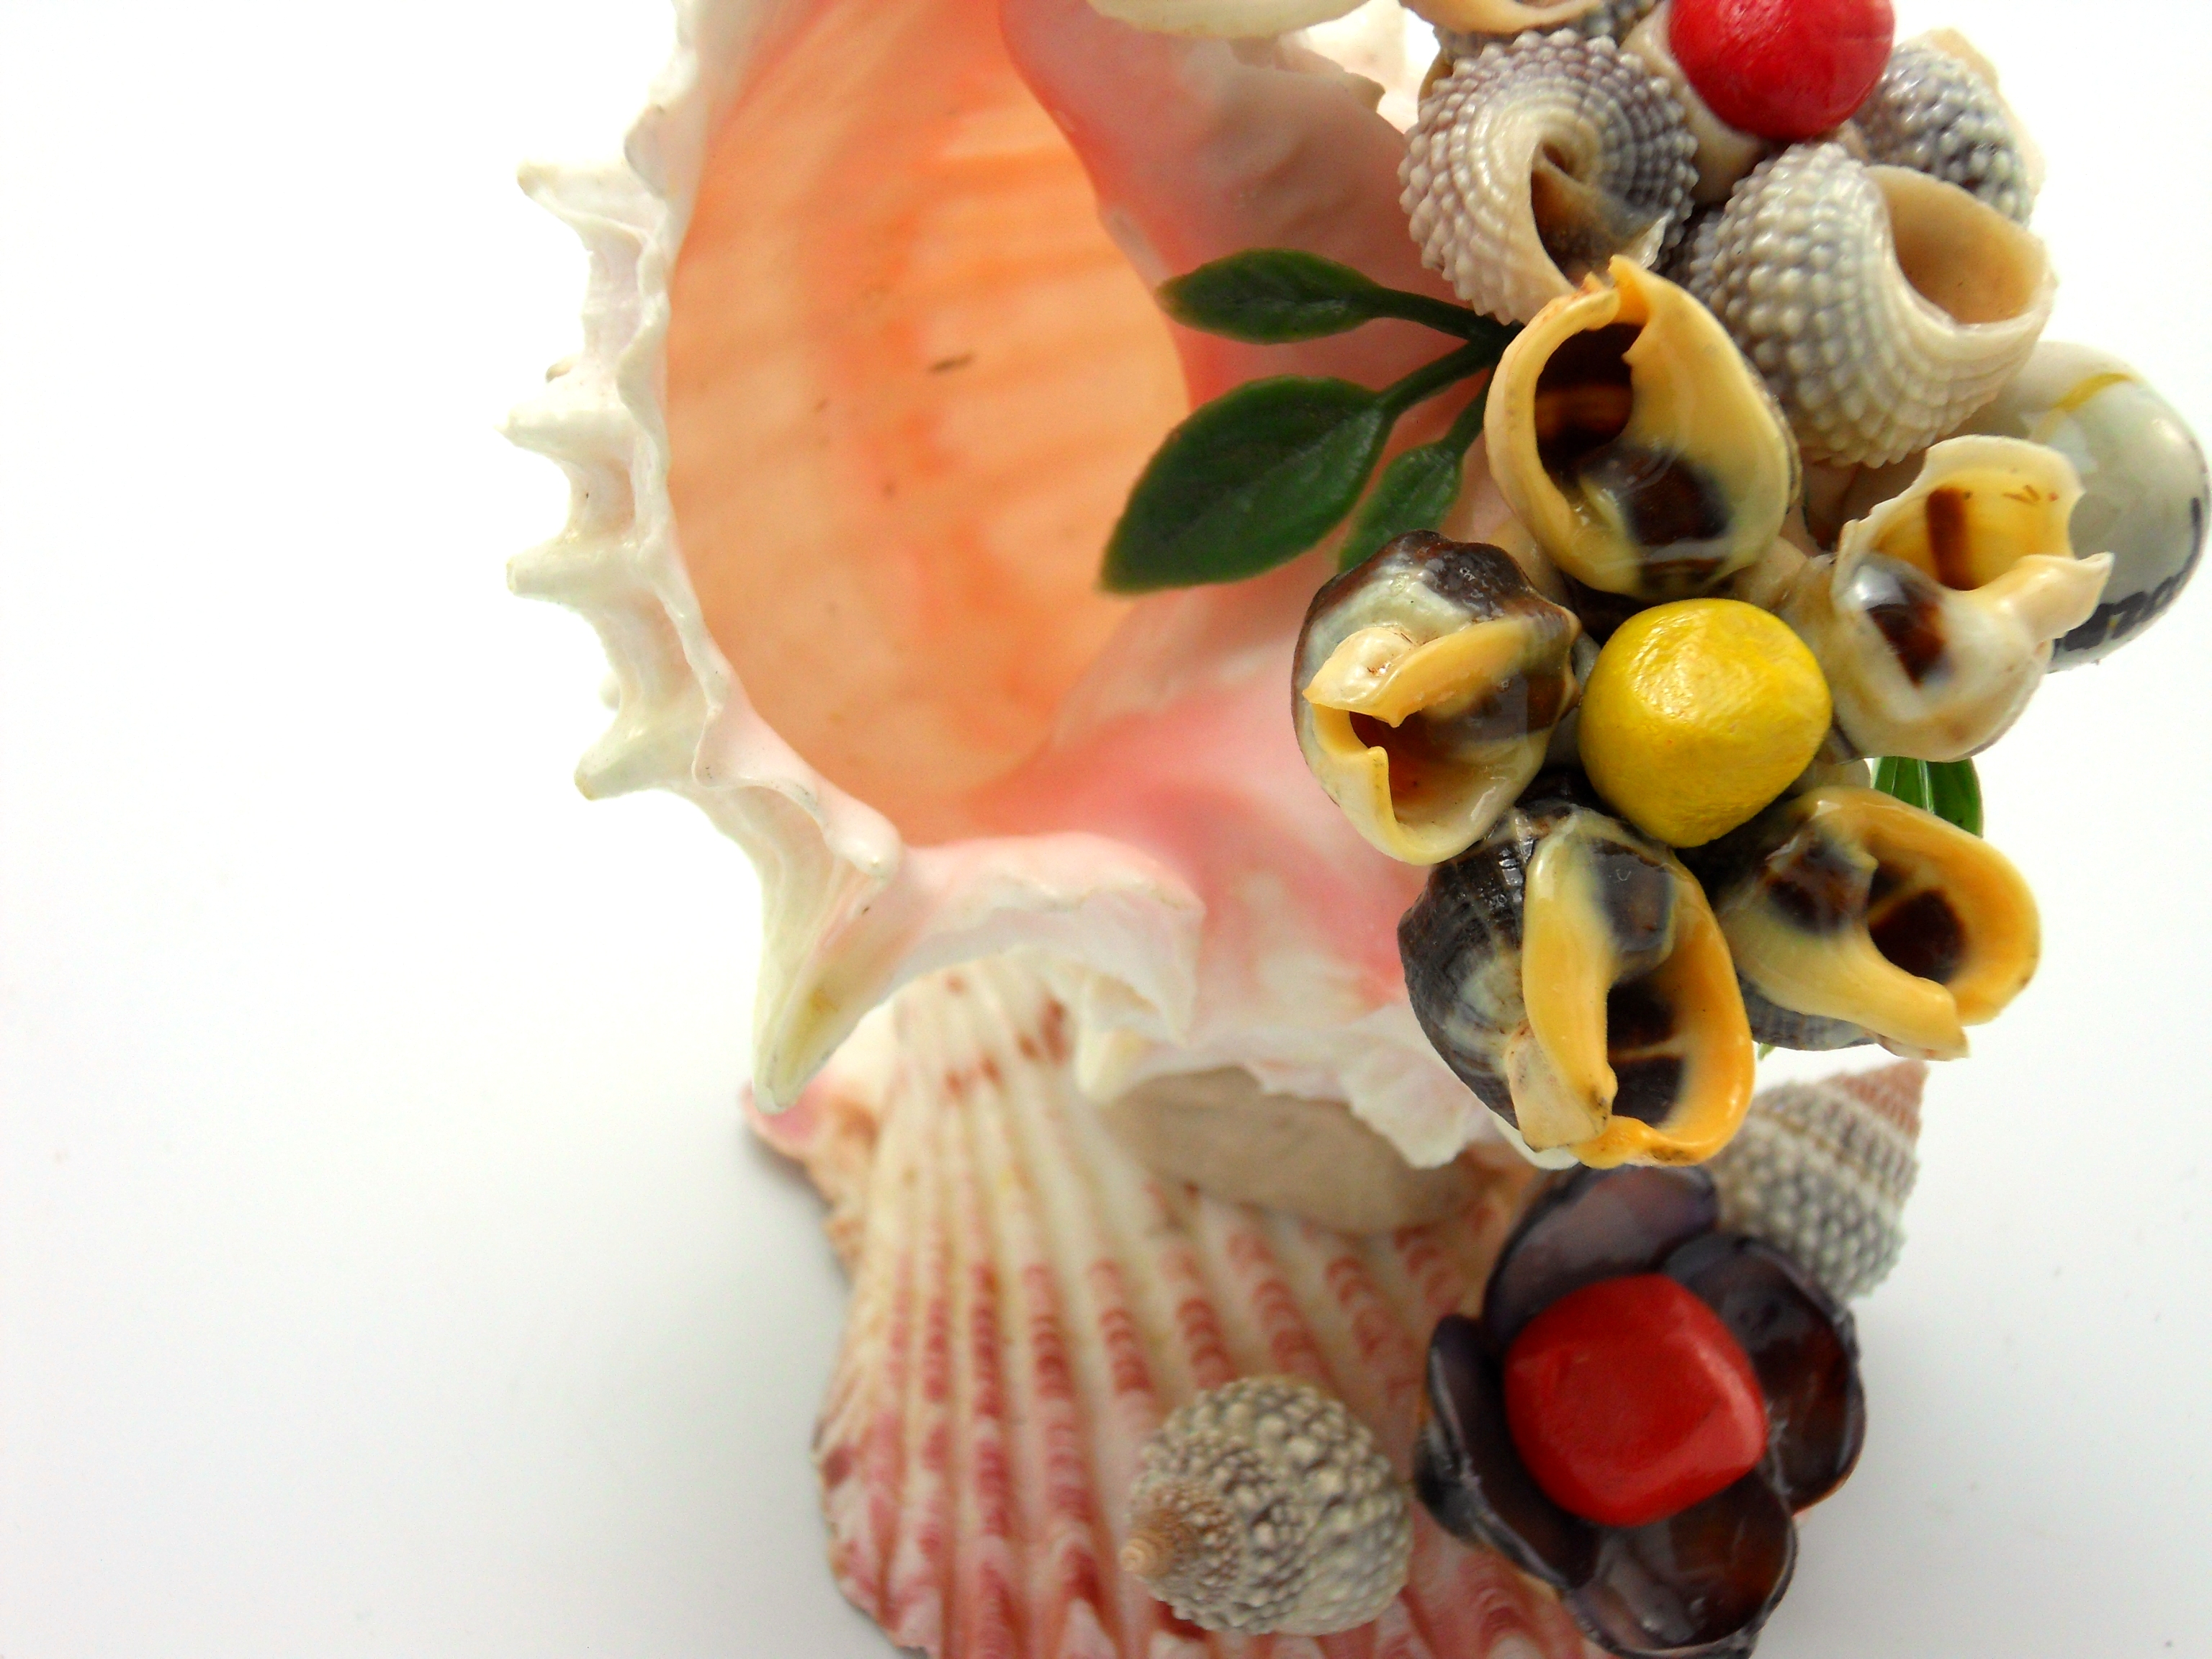 Sea-shell figure photo